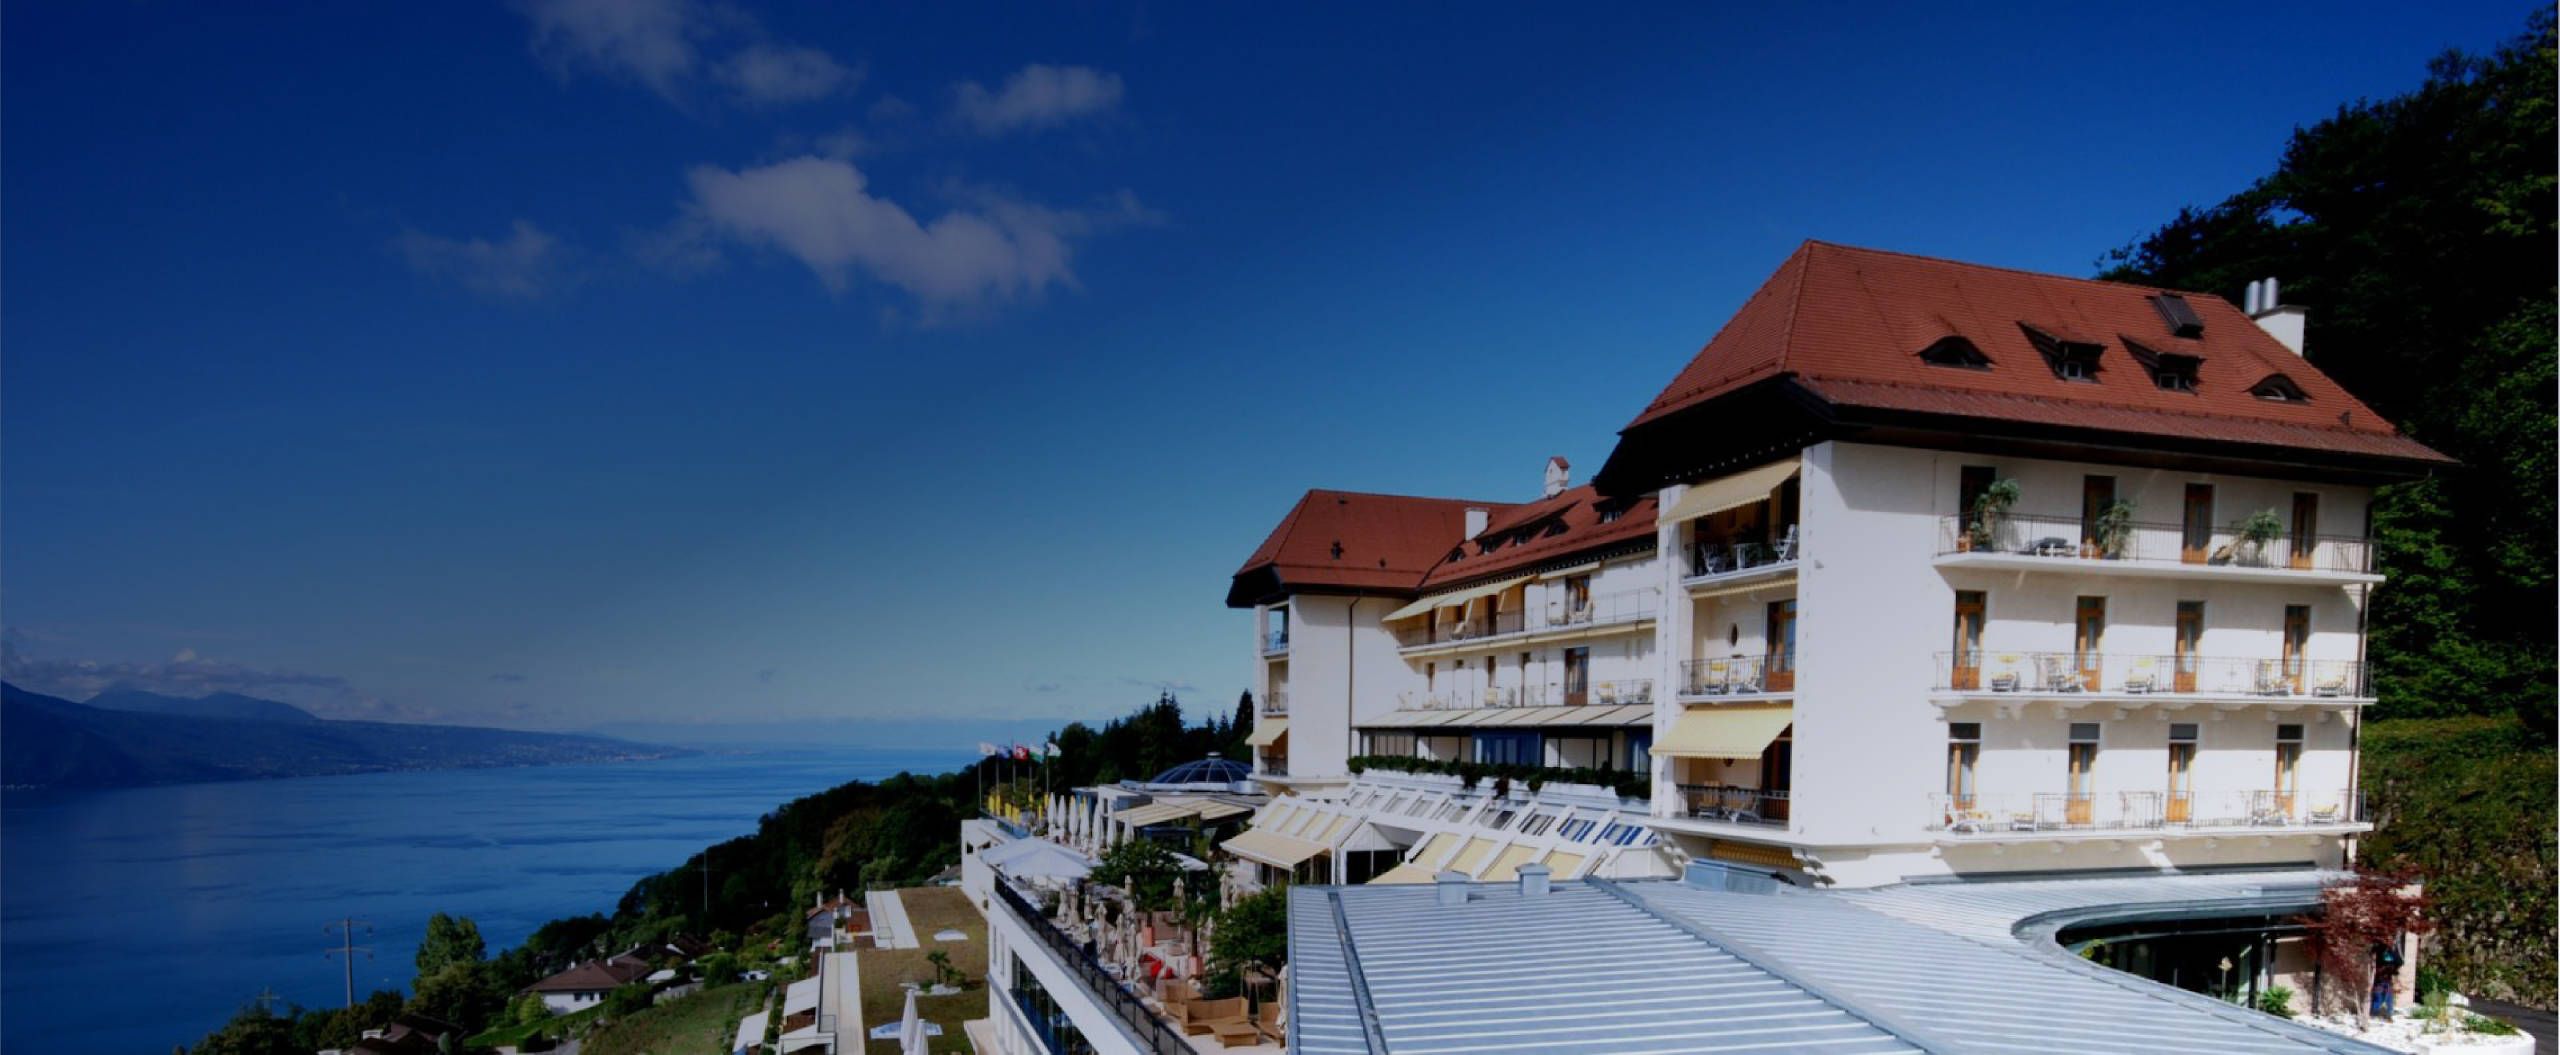 Luxury accommodation during your detox retreat in Switzerland